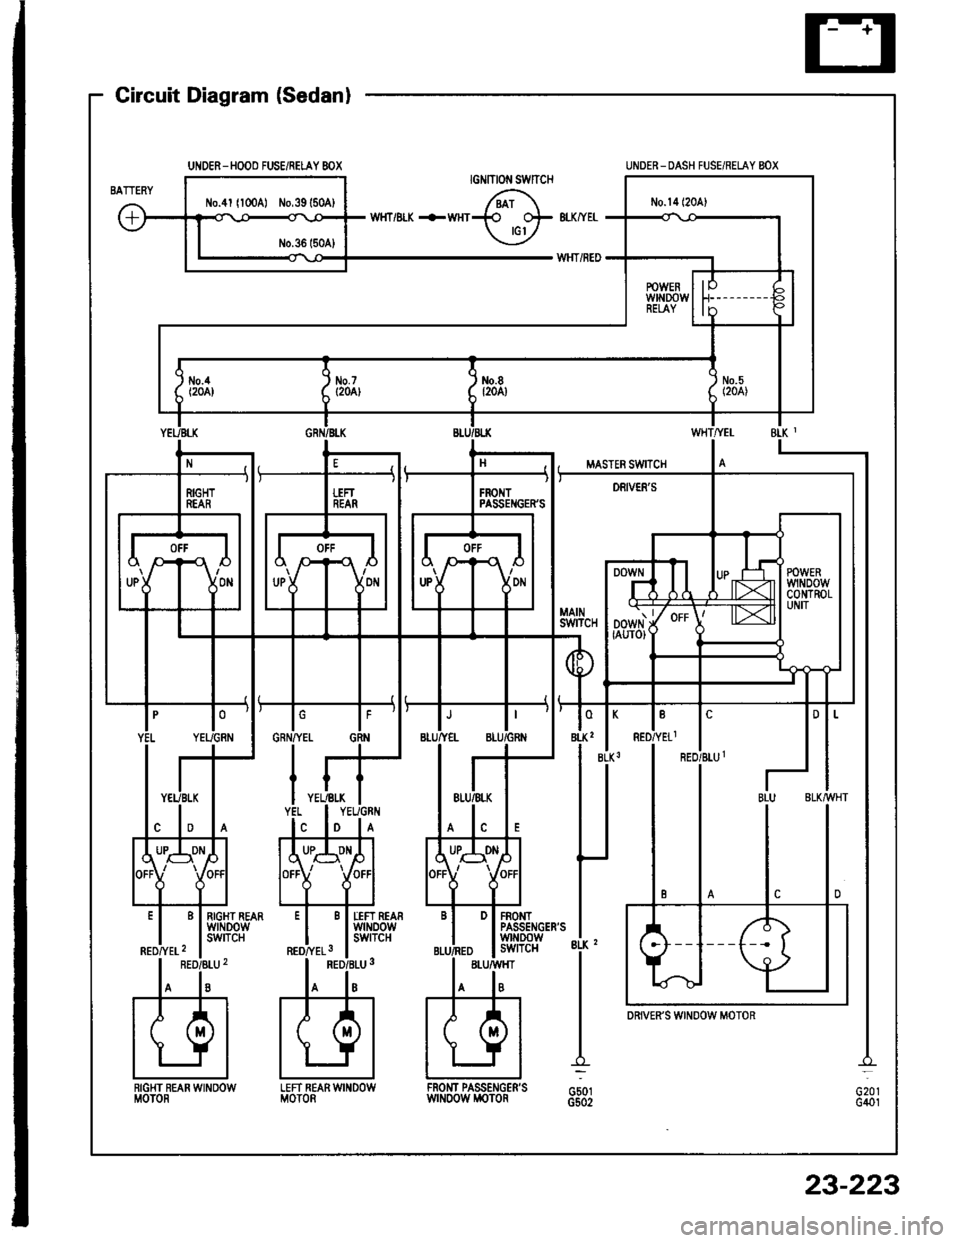 HONDA INTEGRA 1994 4.G Owners Manual UNOER-HOOO FUSE/RELAY 8OX
Circuit Diagram (Sedanl
G20rG401
UNDER_ DASH FUSE/RELAY BOX
LEFT REARWINDOWMOTORRIGHT REAN WINOOWMOTORFROI{T PASSENGERSwrNoow i,roToRG501G502
DRiVERS WINOOW MOTOR
23-223 